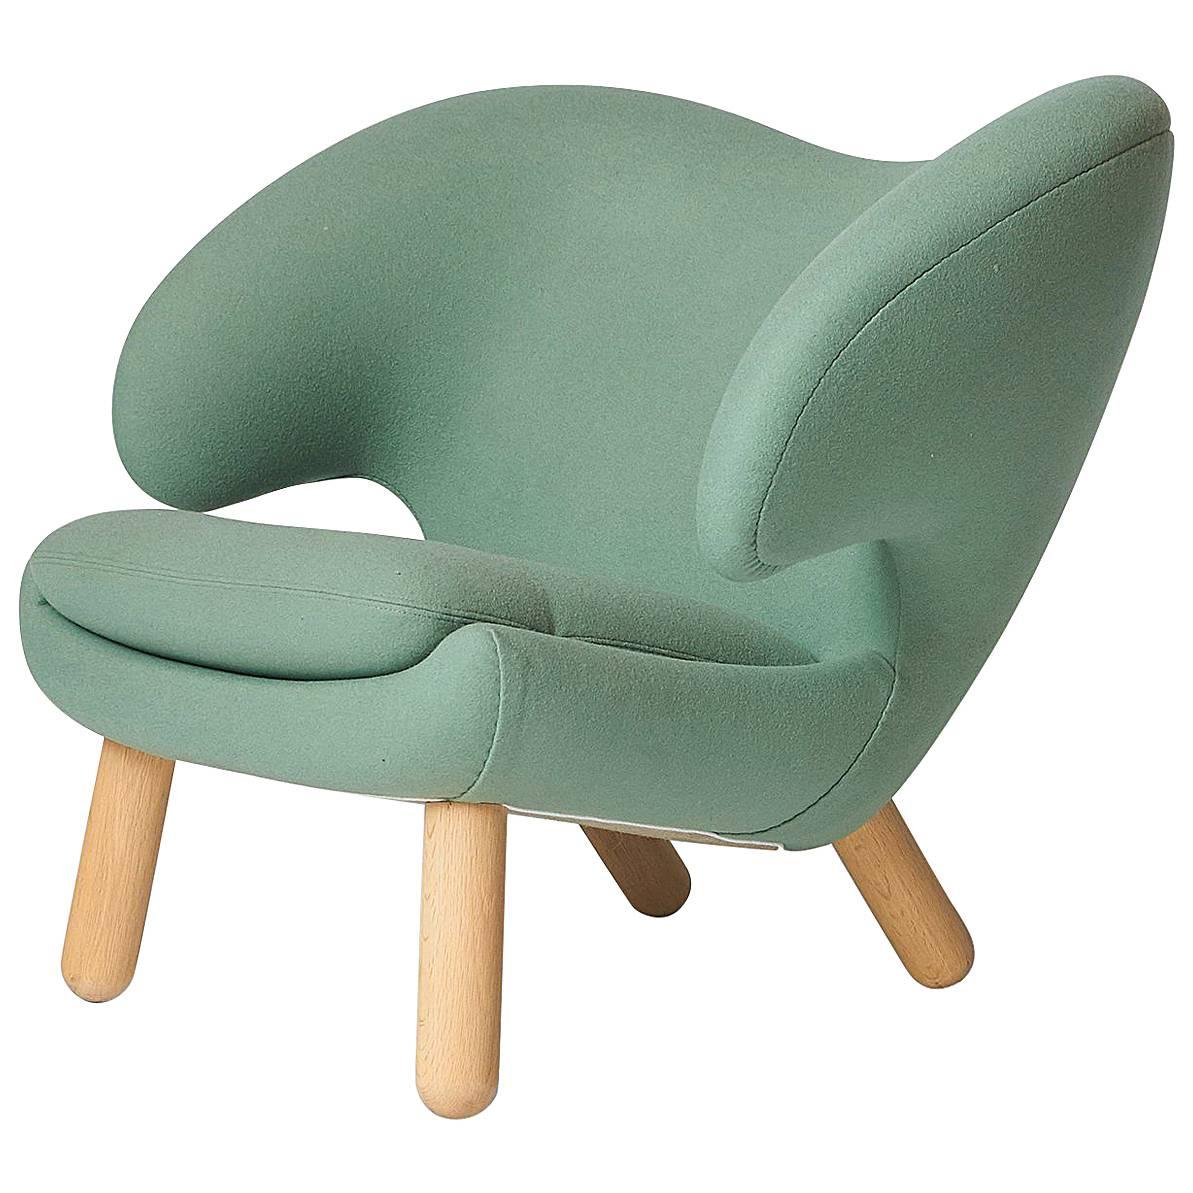 Finn Juhl "Pelican" Chair